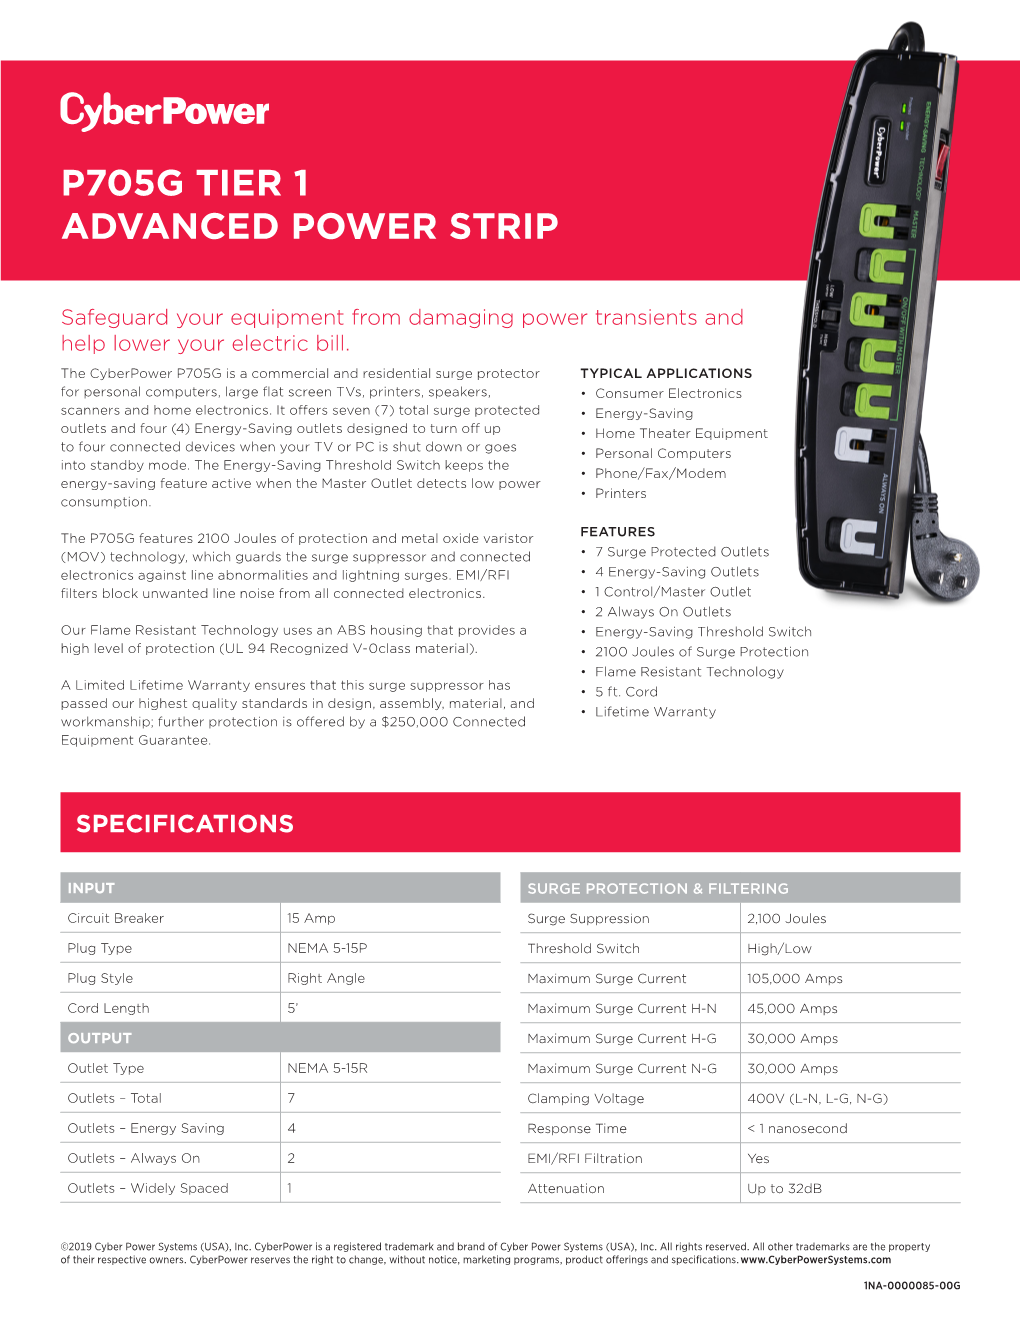 P705g Tier 1 Advanced Power Strip